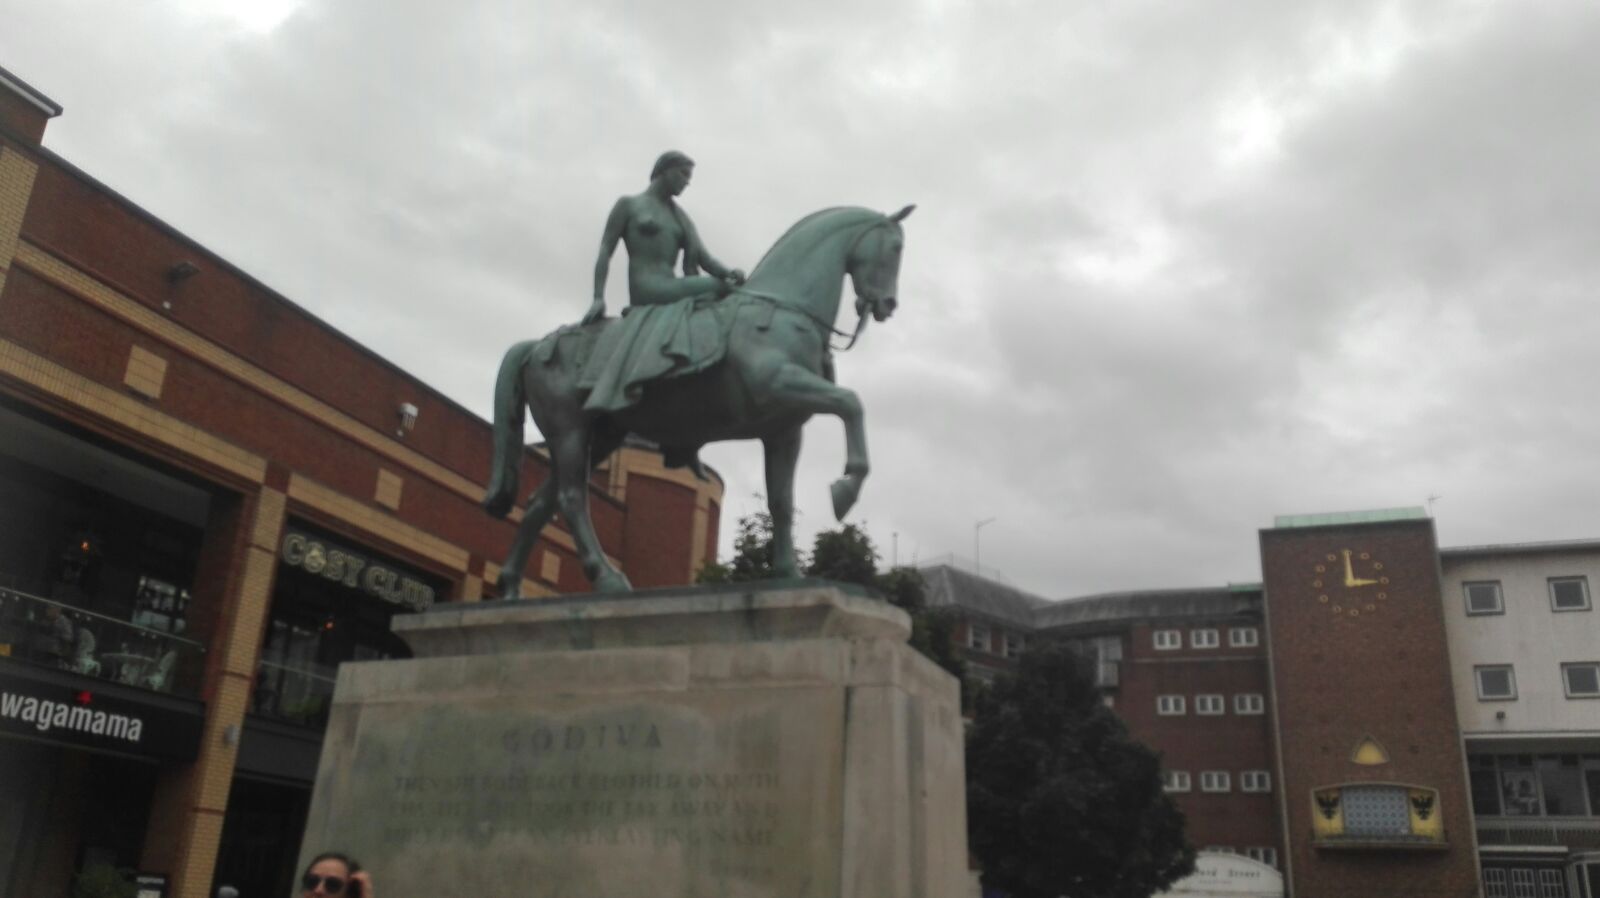 Estatua de Lady Godiva en Coventry